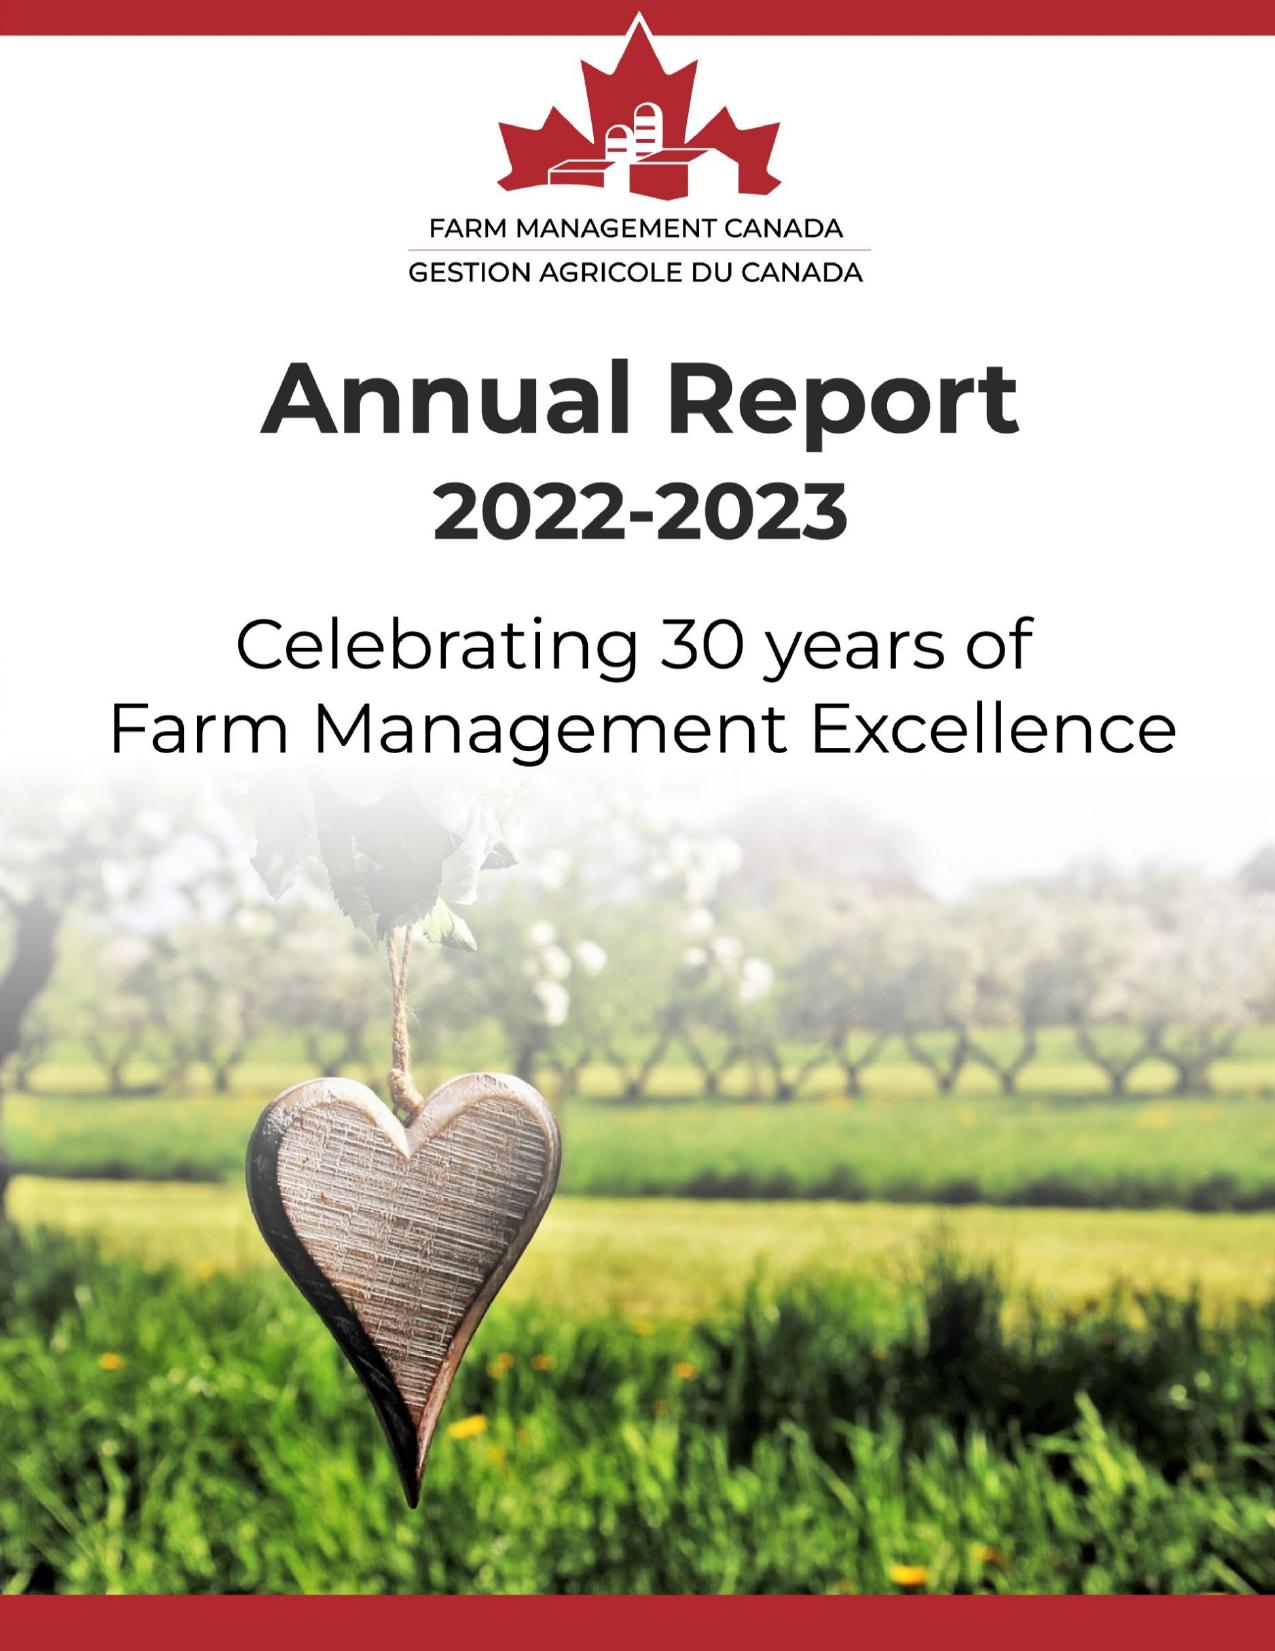 FMC-GAC 2023 Annual Report